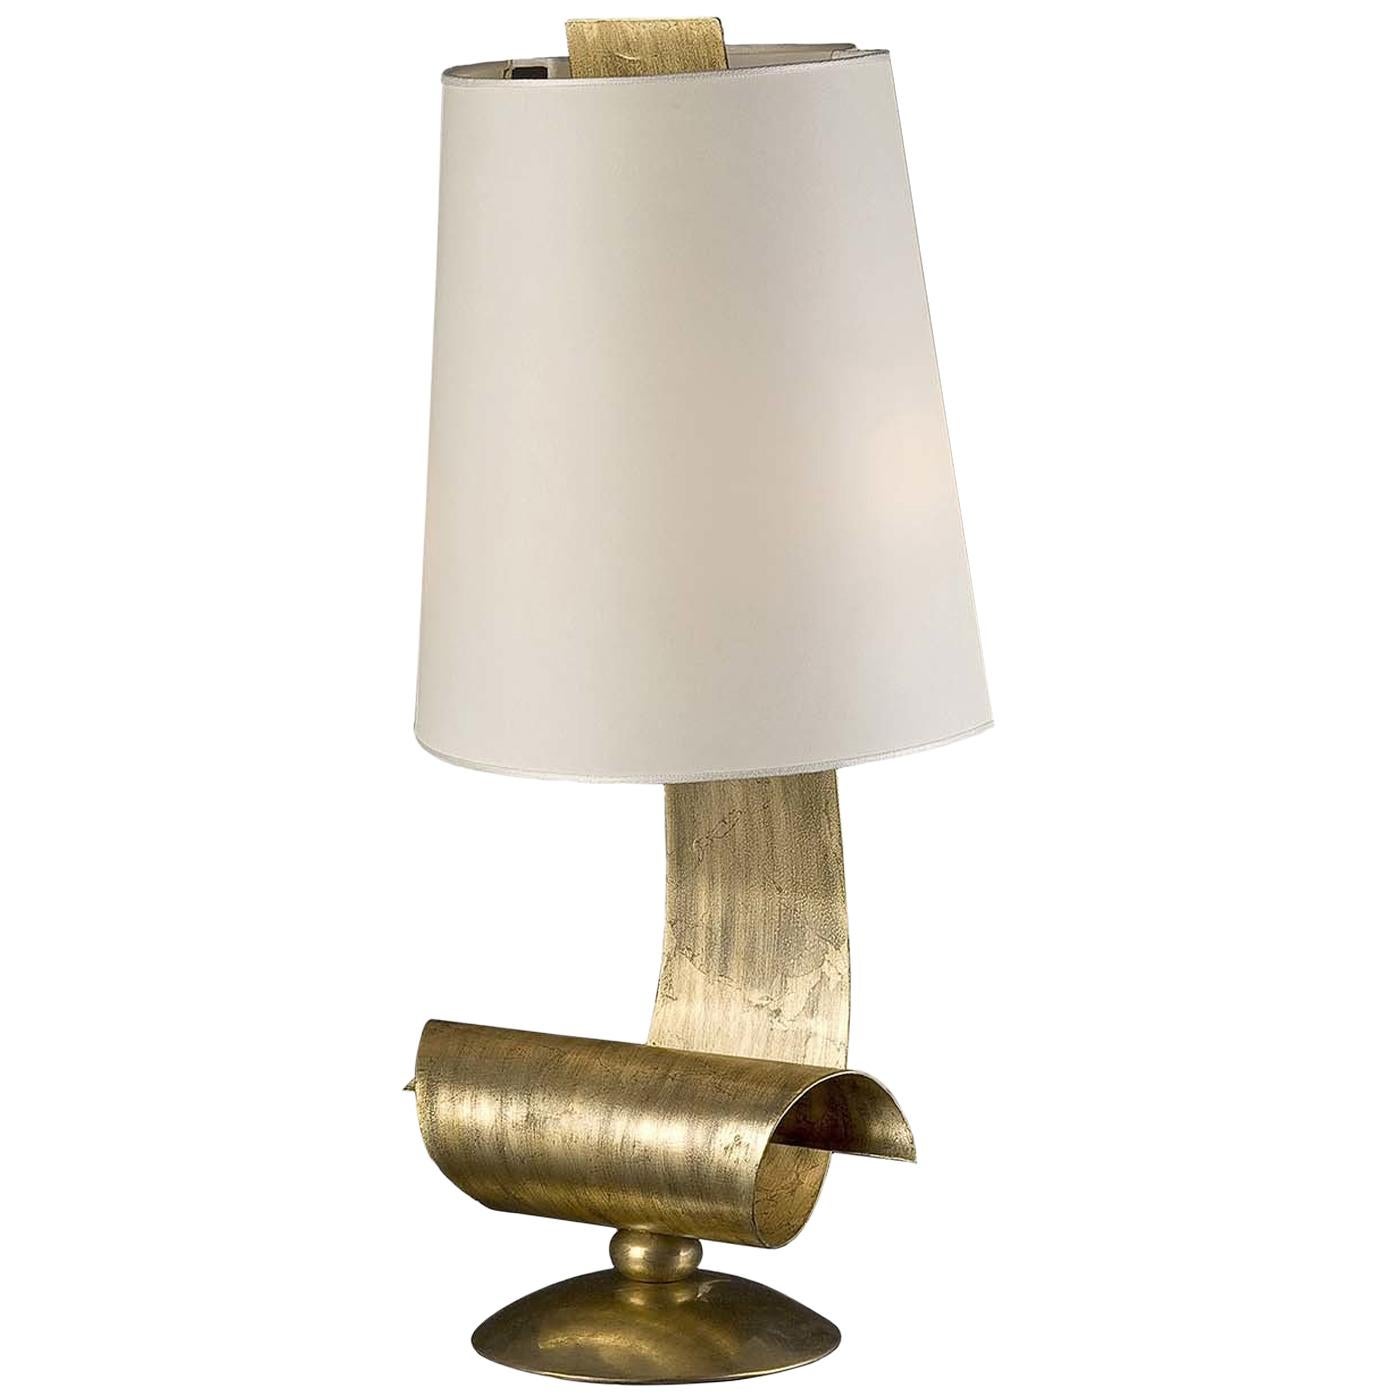 Riccioli Lamiera Table Lamp For Sale